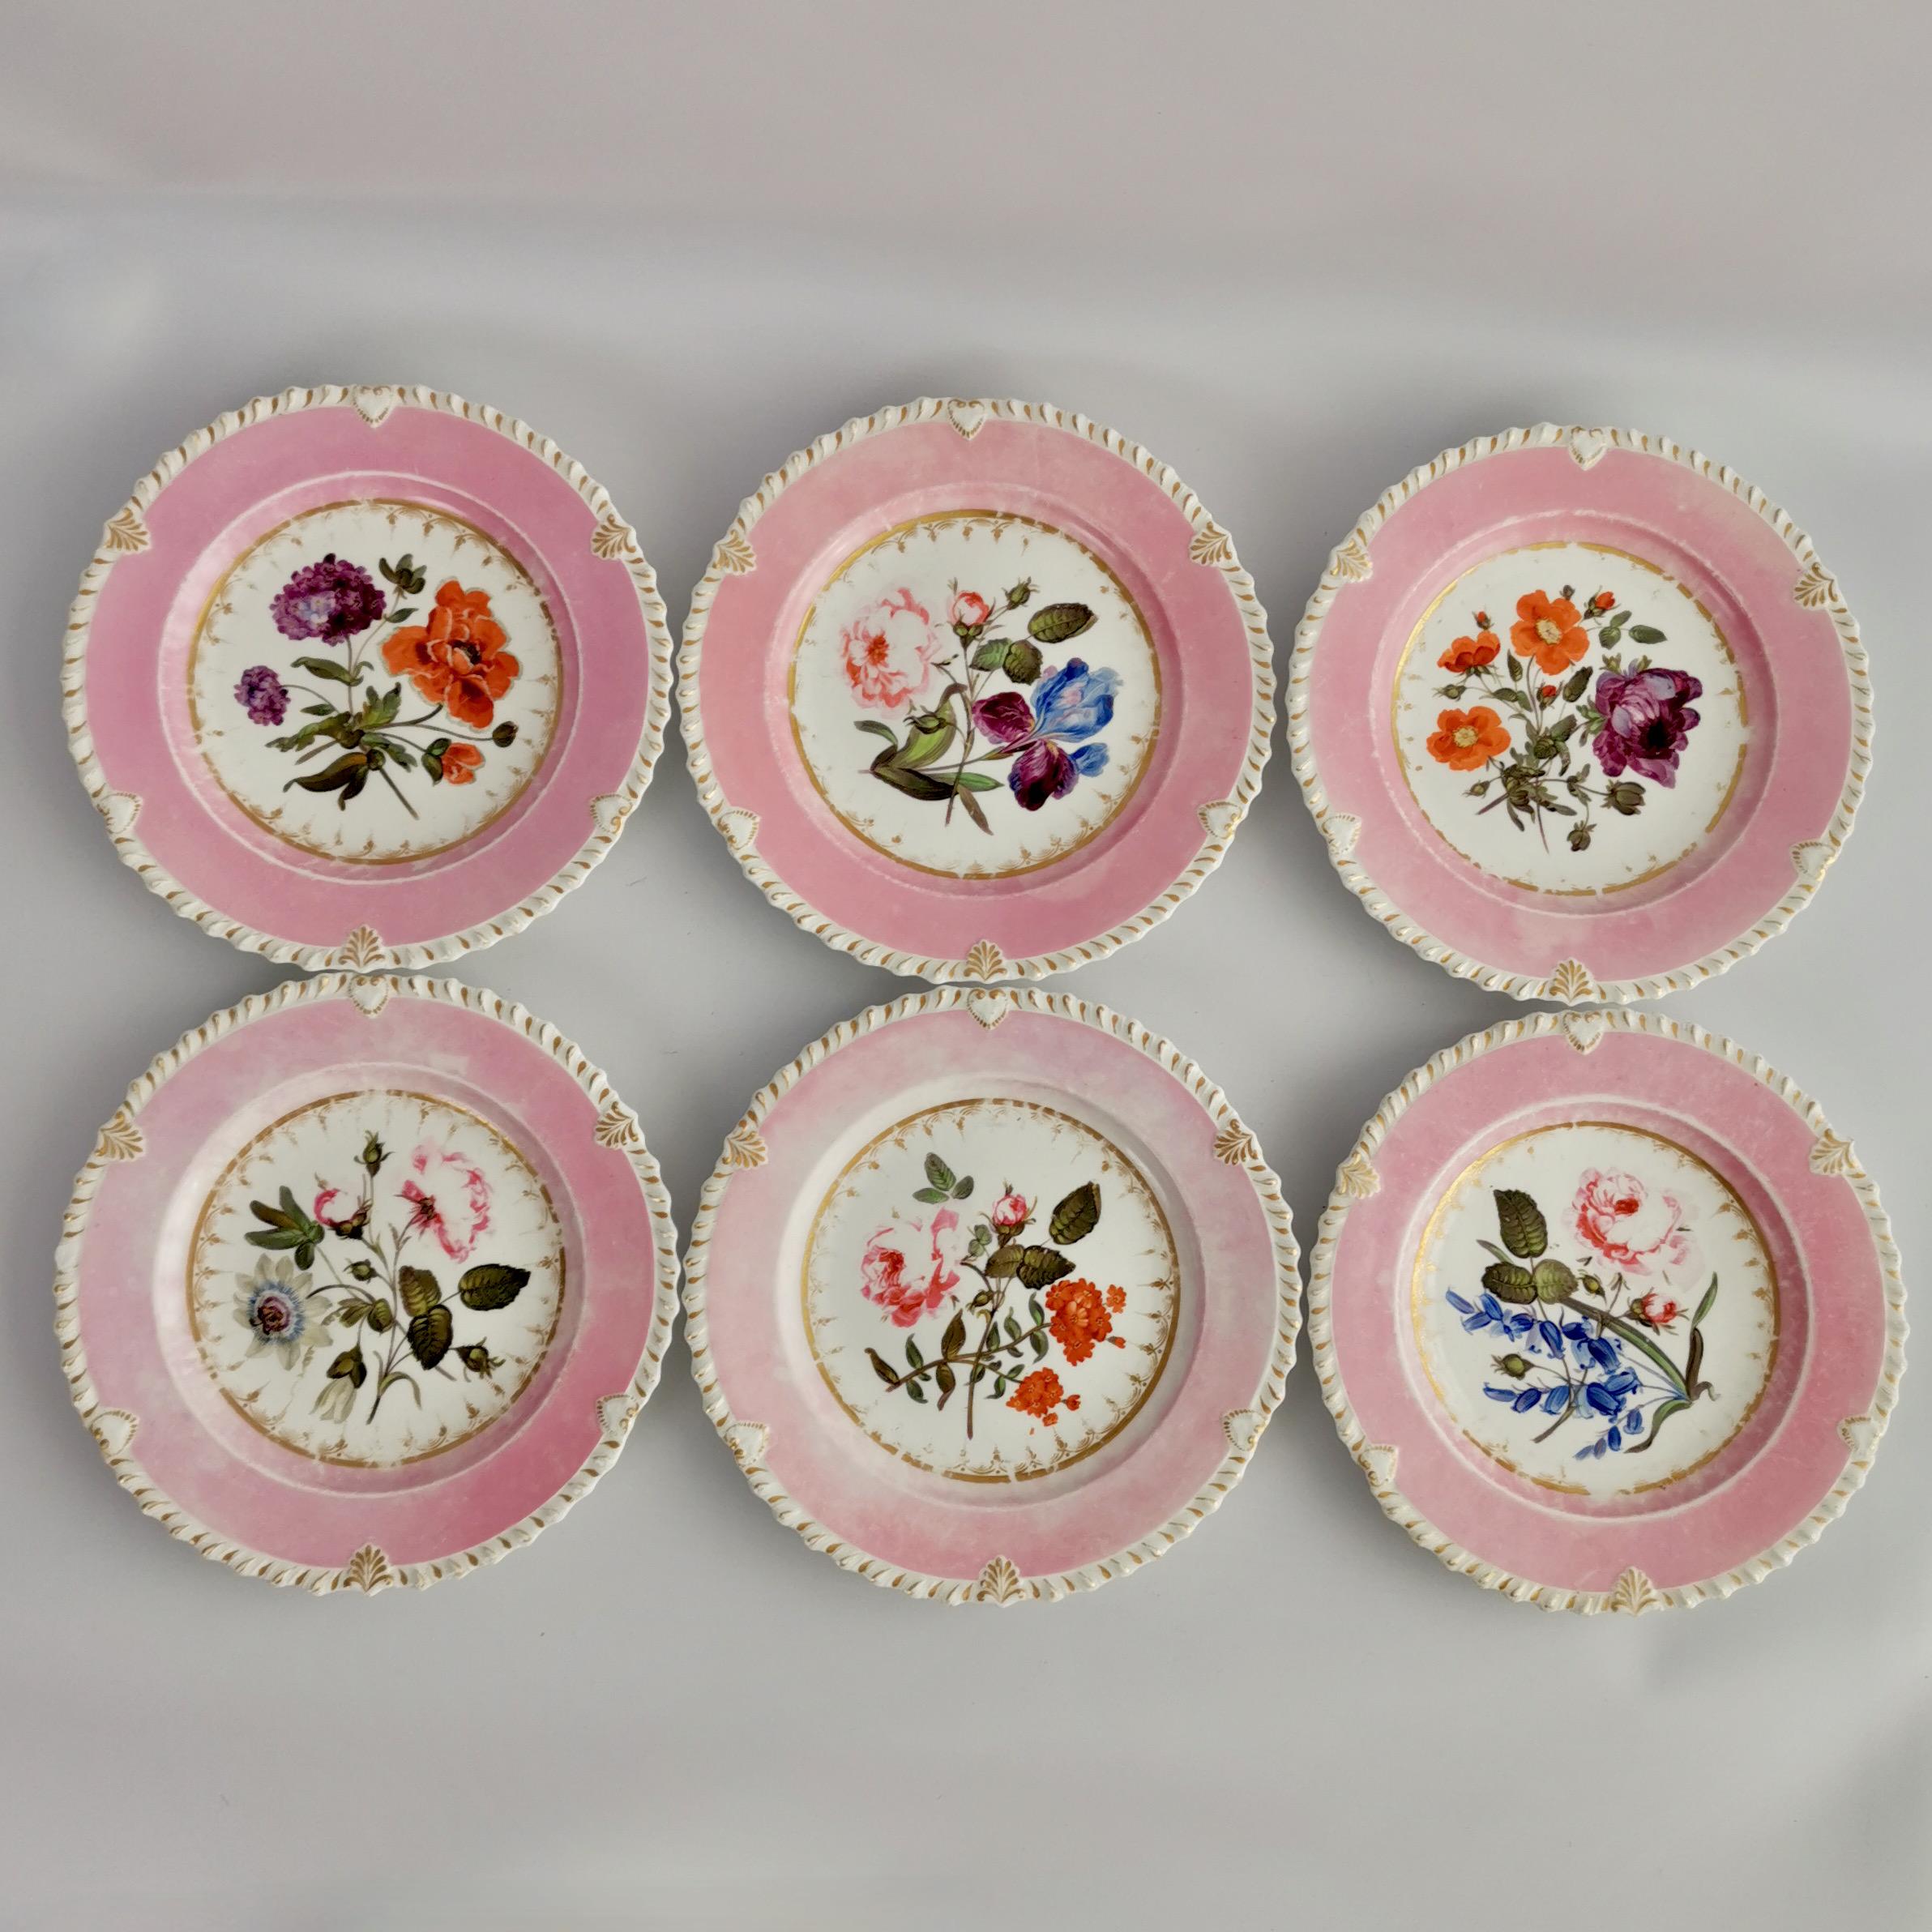 Coalport Porcelain Dessert Service, Pink with Flowers, Regency 1820-1825 11